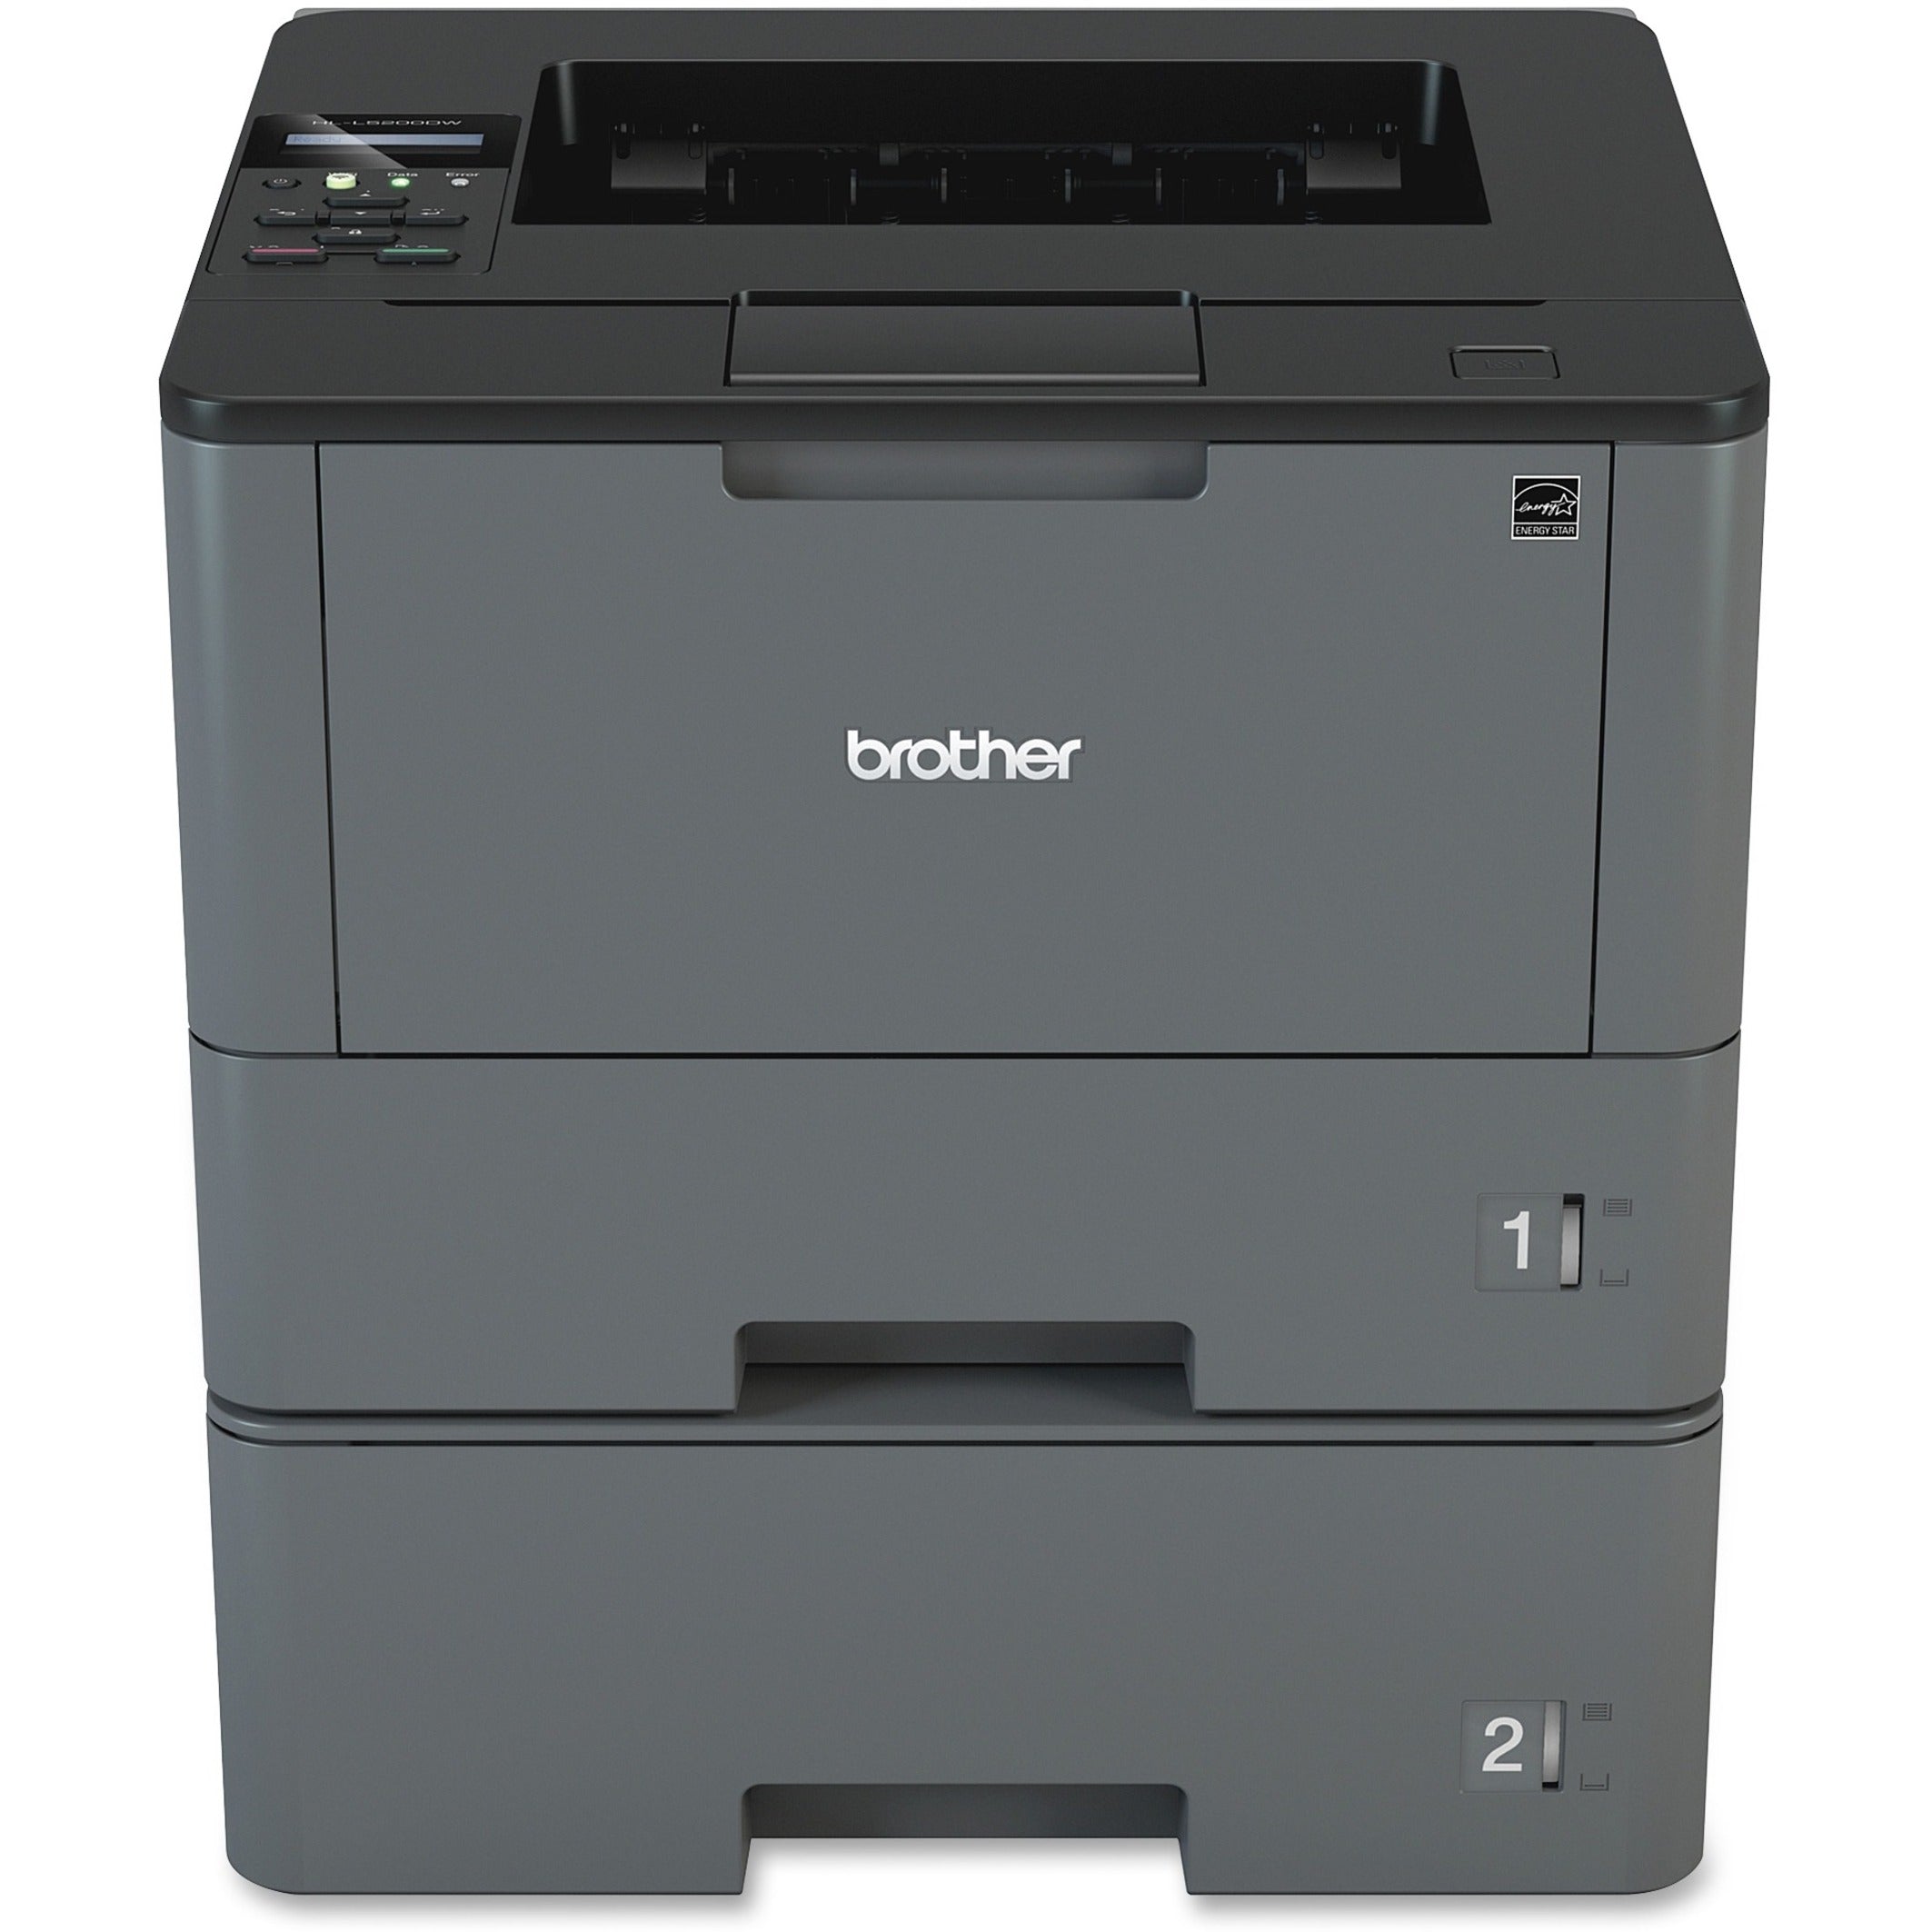 Brother HLL5200DWT HL-L5200DWT Monochrome Laser Printer, 42ppm, 250-Sheet Capacity, Black/Gray